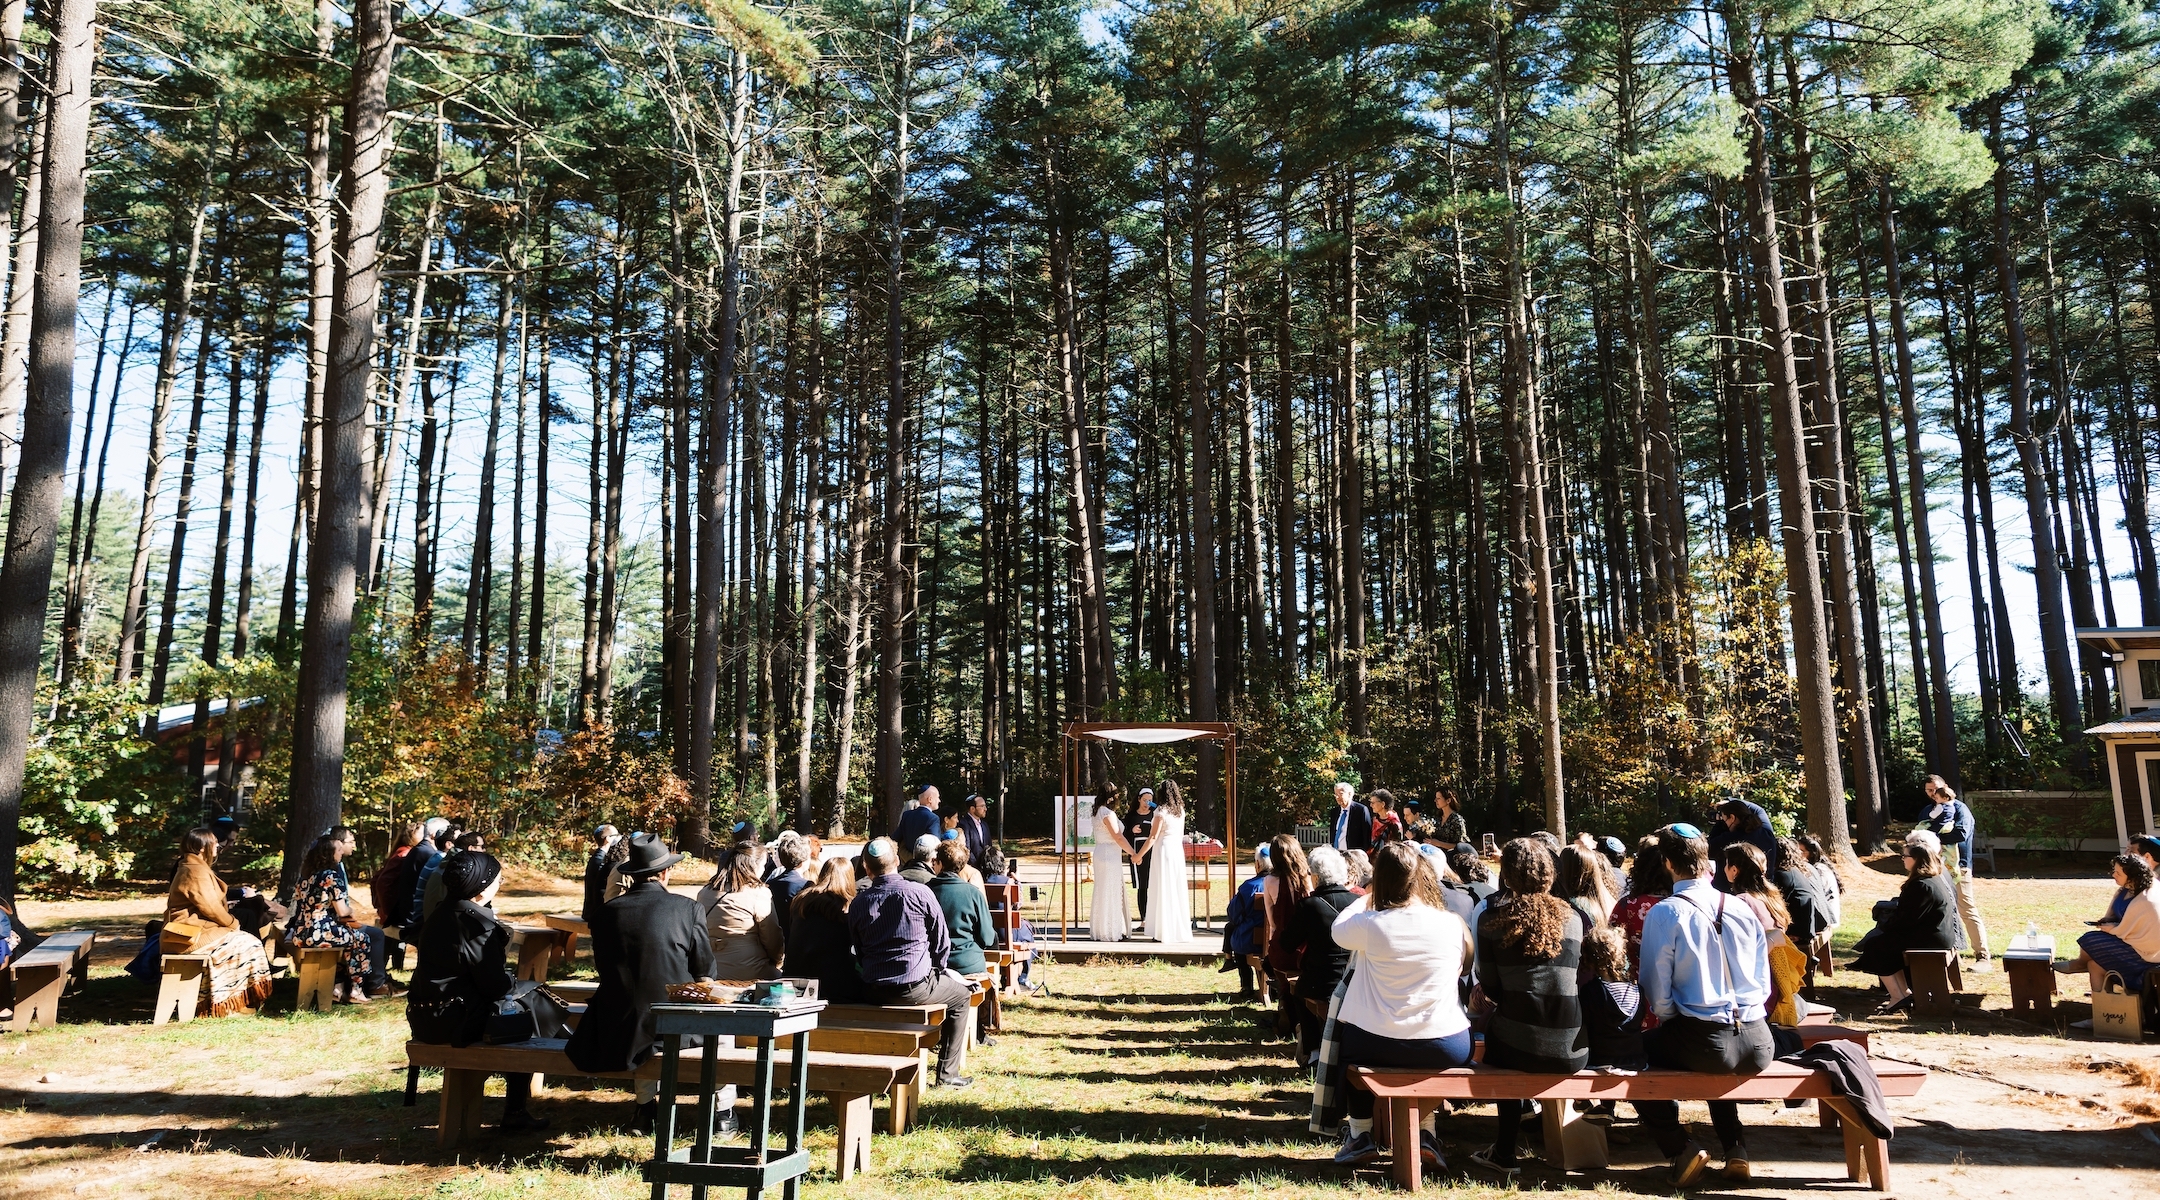 An outdoor Jewish wedding